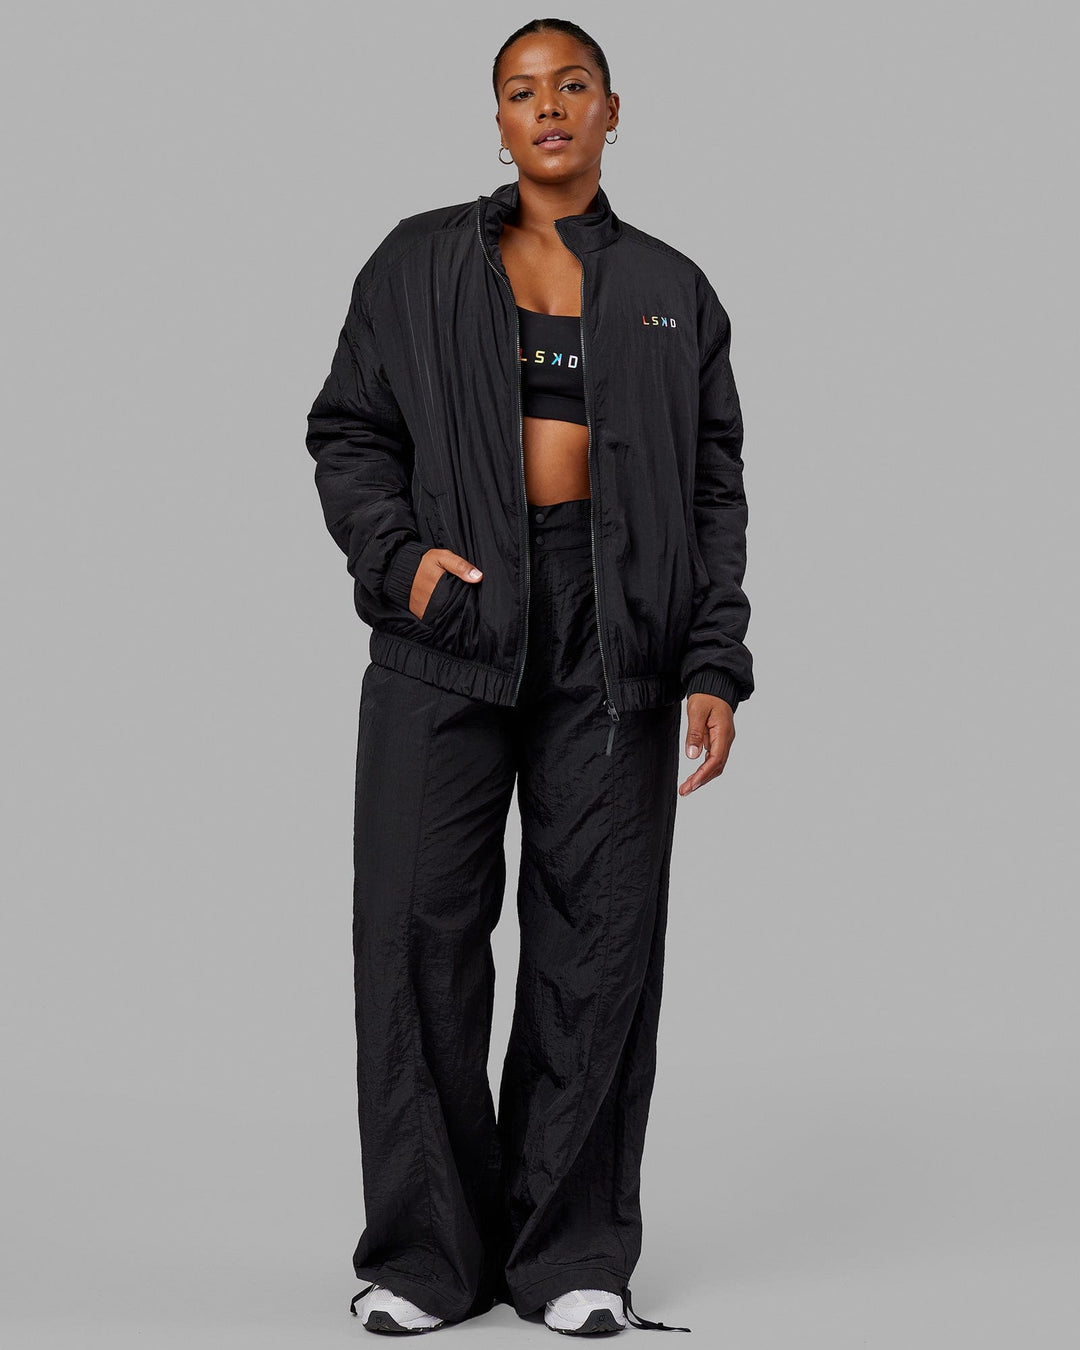 Woman wearing Unisex Amplify Bomber Jacket - Black